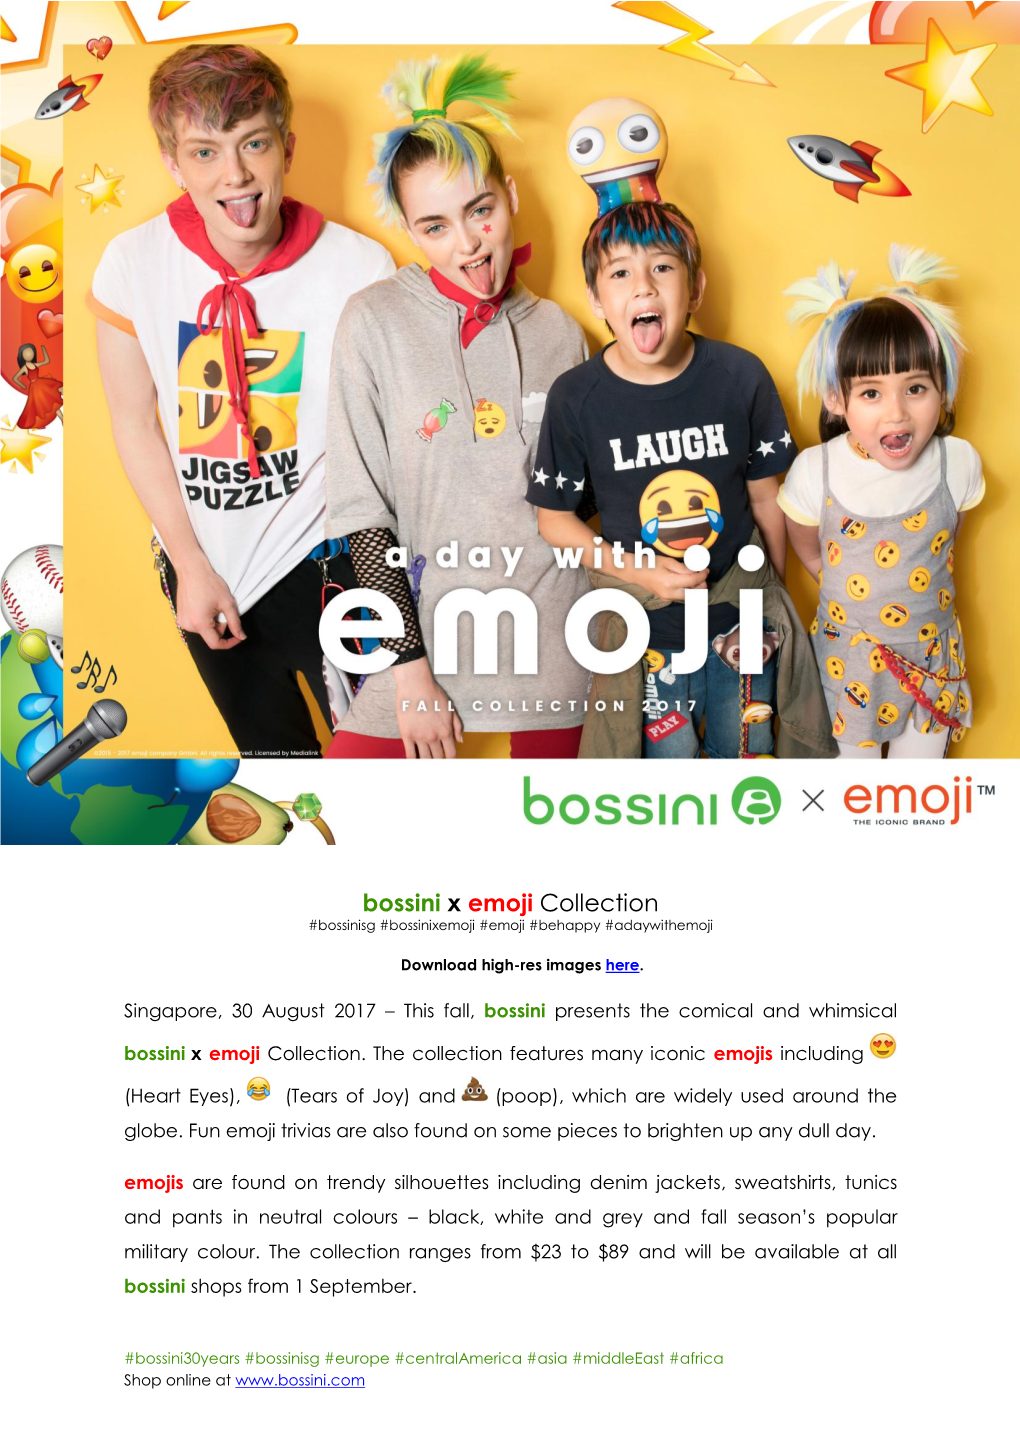 Bossini X Emoji Collection #Bossinisg #Bossinixemoji #Emoji #Behappy #Adaywithemoji